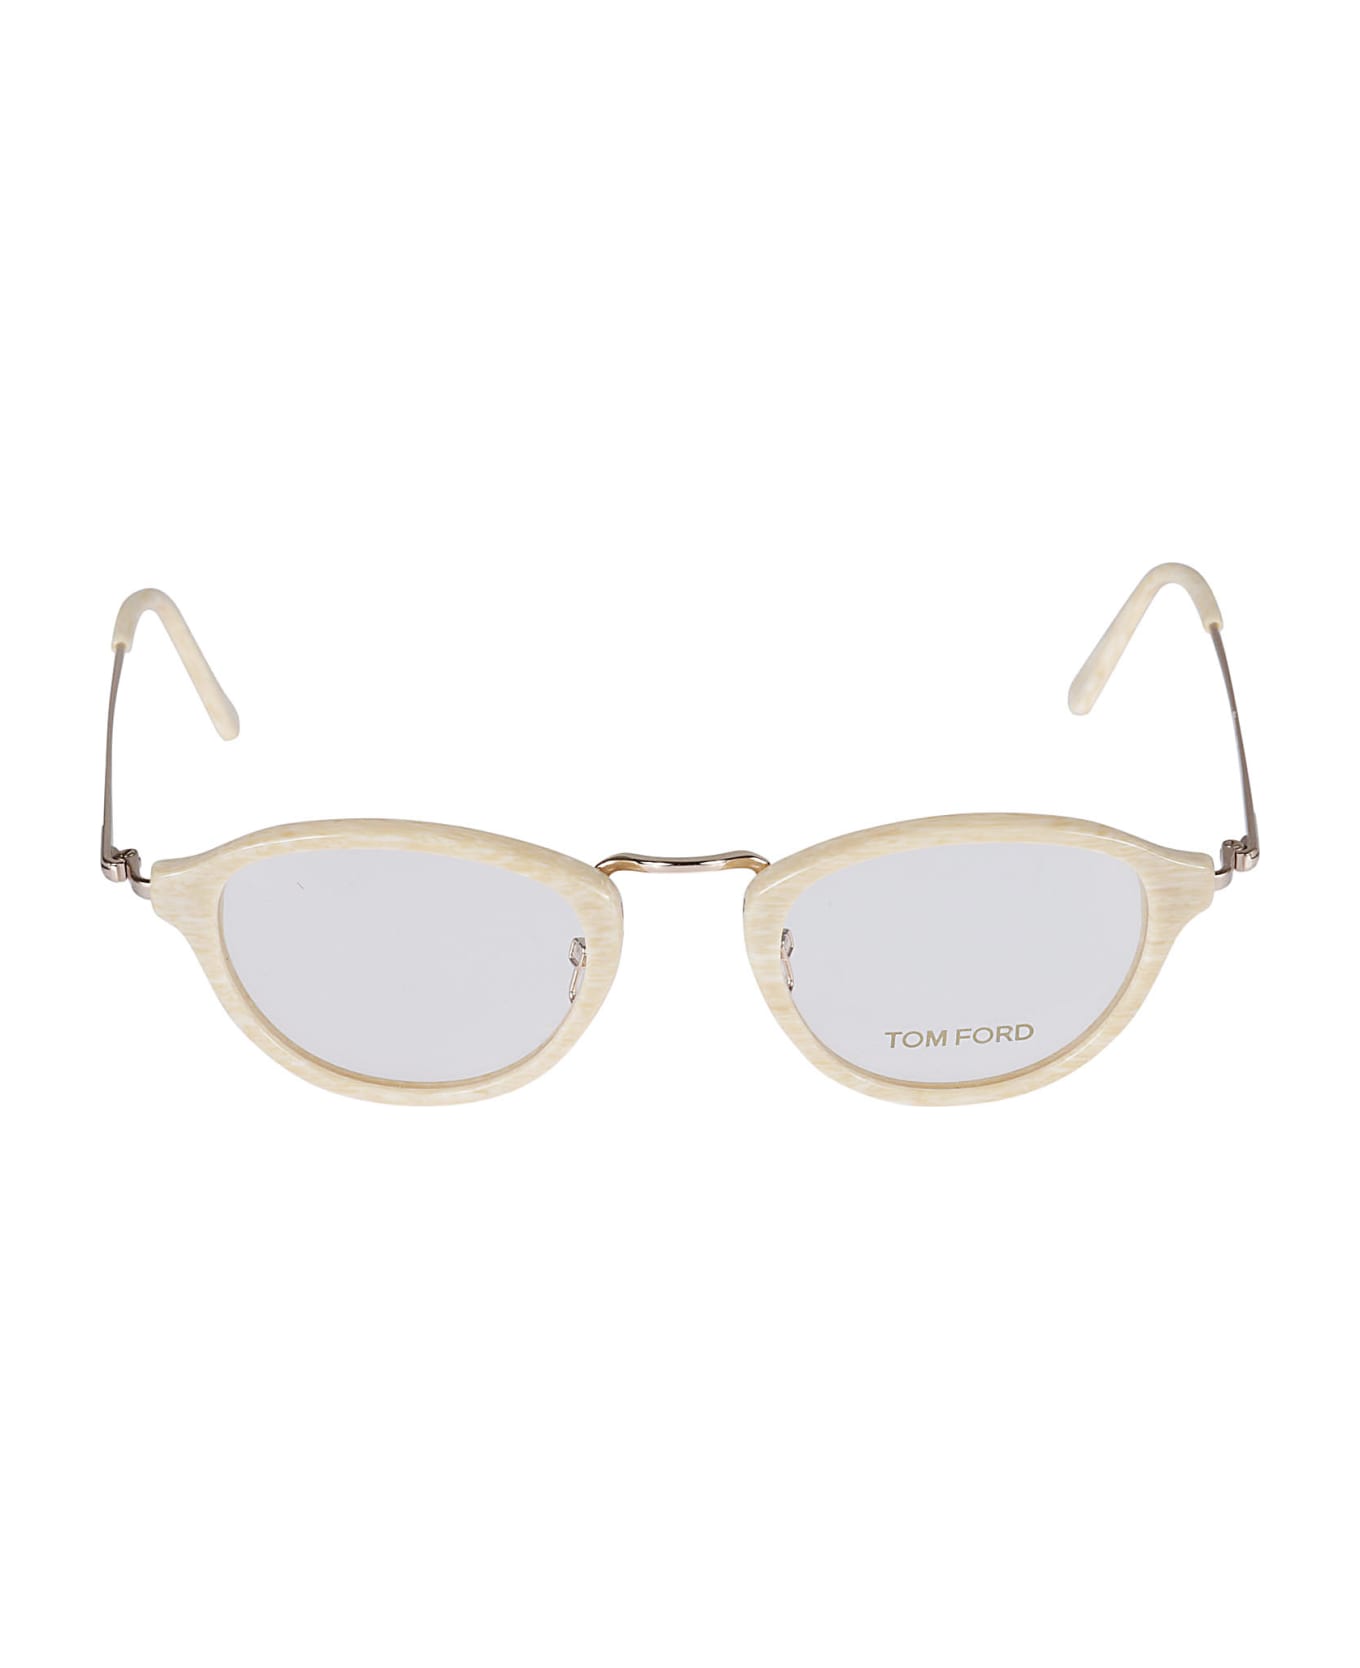 Tom Ford Eyewear Round Lens Slim Temple Glasses - 060